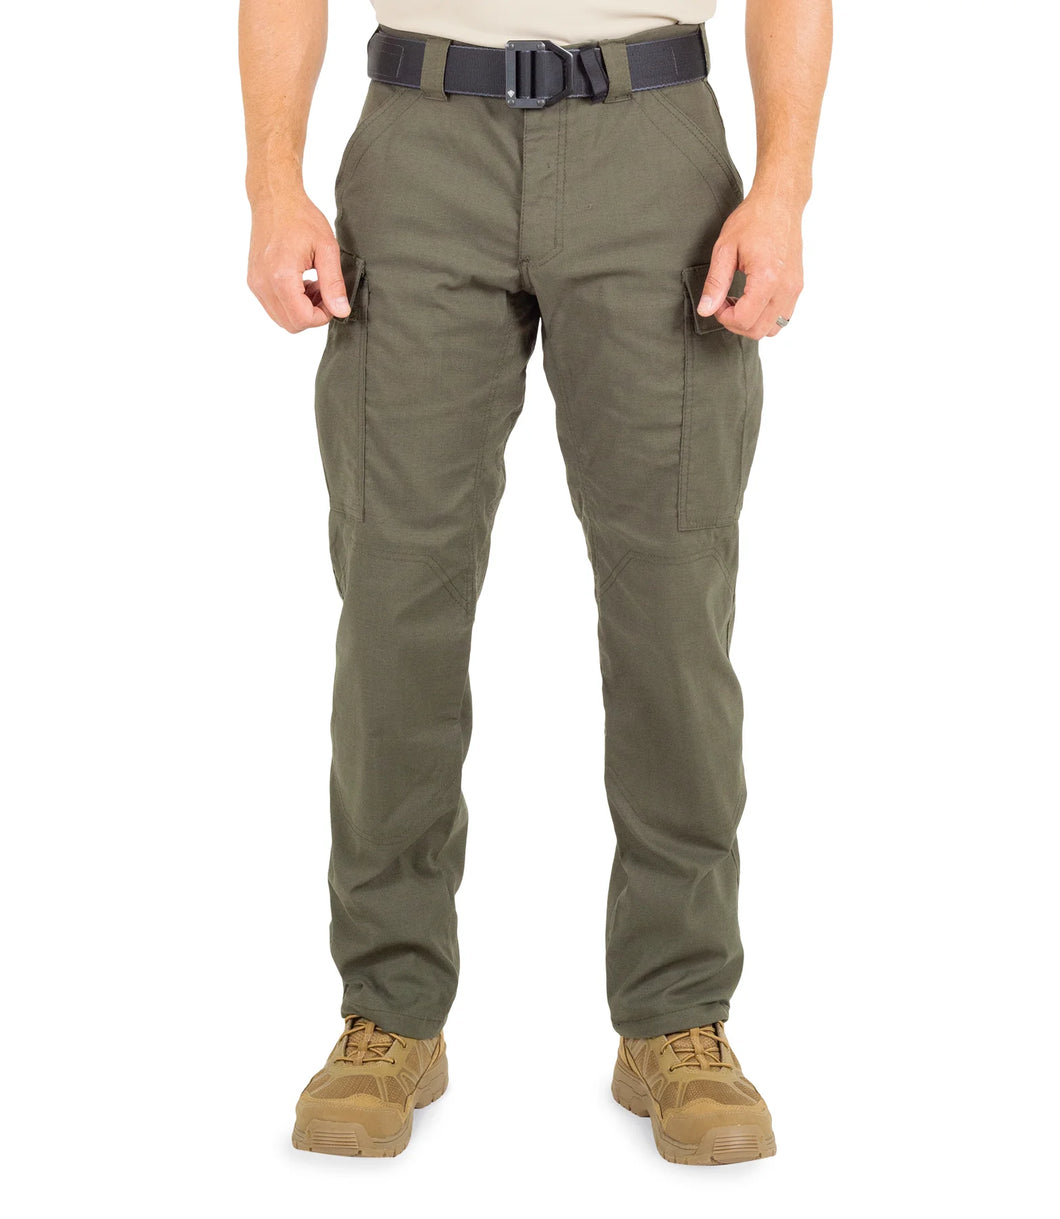 First Tactical Men's V2 BDU Pants OD Green